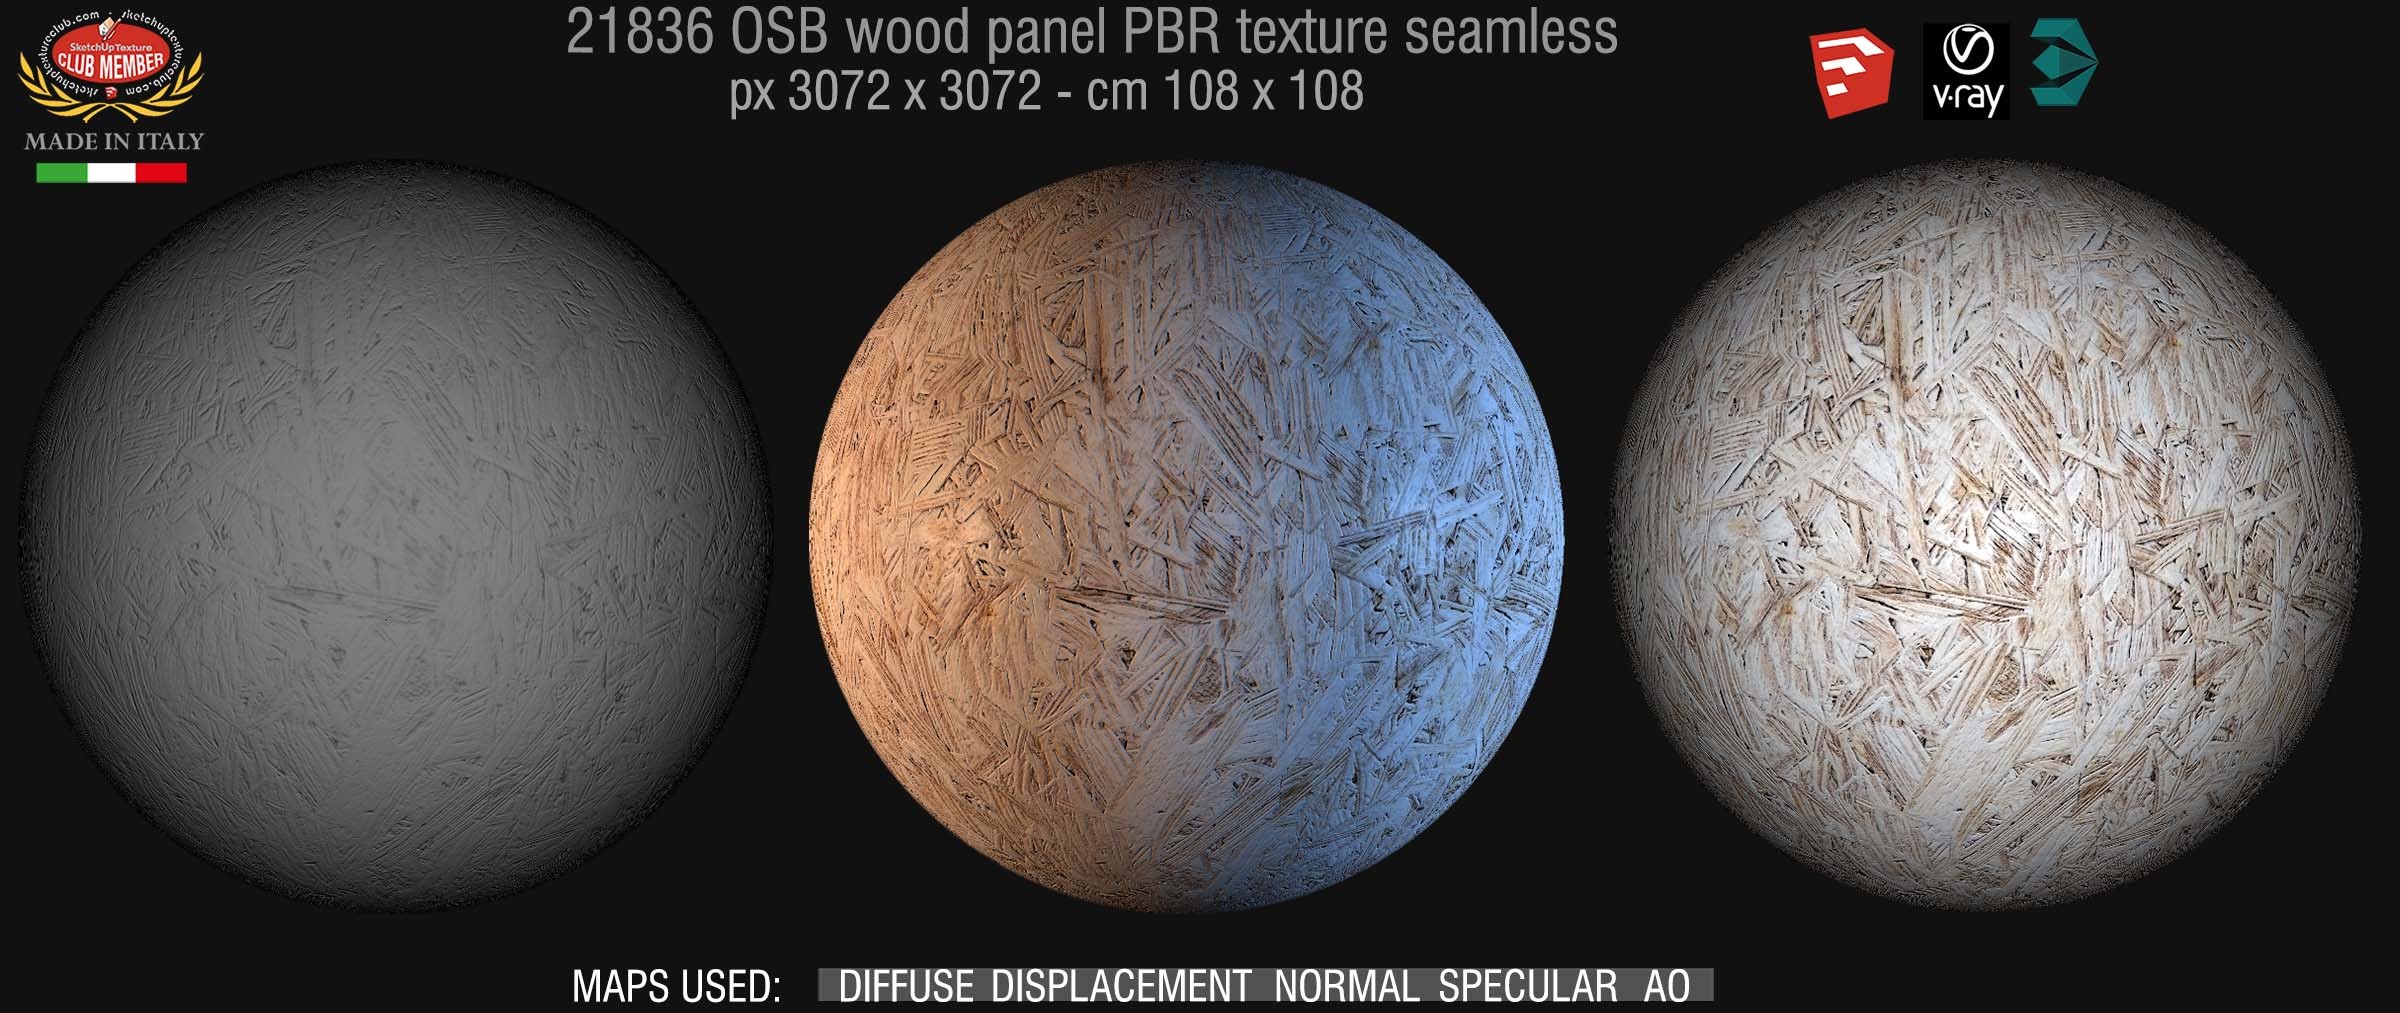 21836 OSB wood panel PBR texture seamless demo